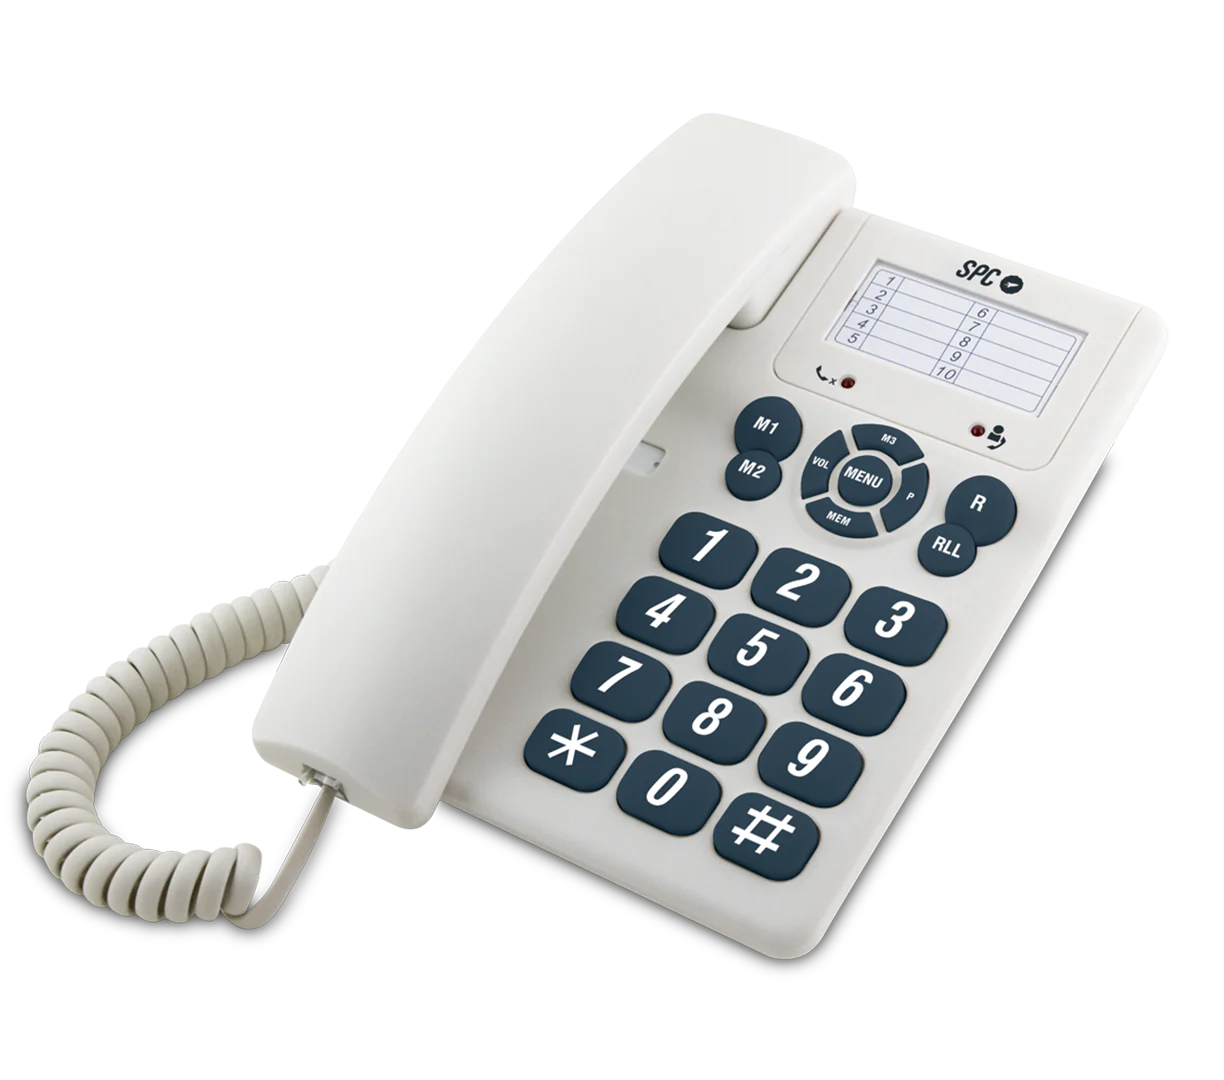 SPC Original Telefono Fijo Teclas Extragrandes - Diferentes Niveles de Timbre - 3 Memorias Directas 